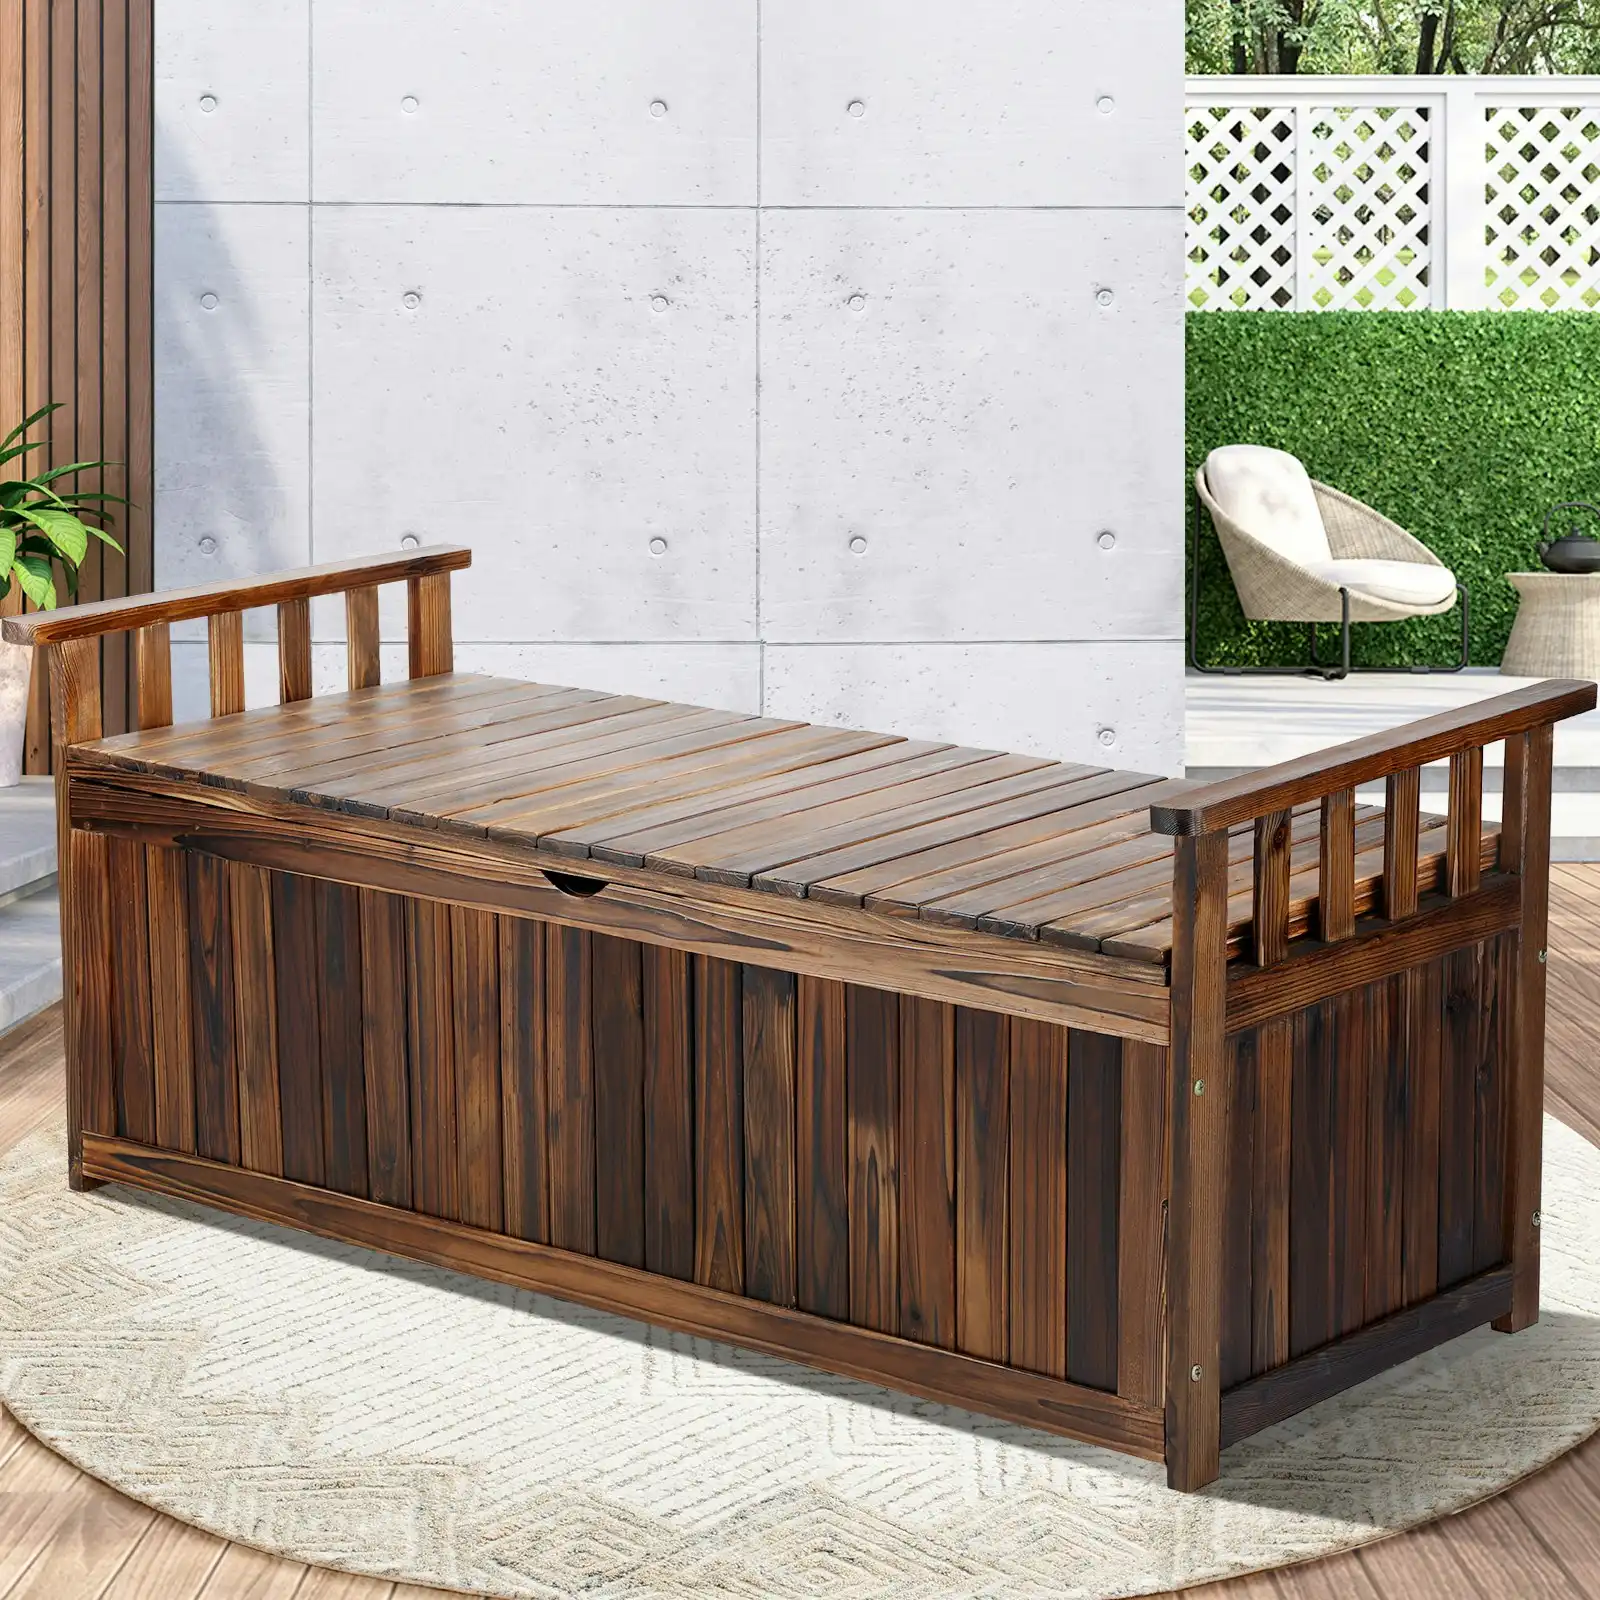 Livsip Outdoor Storage Box Garden Bench Wooden Chest Tool Container Cabinet XL